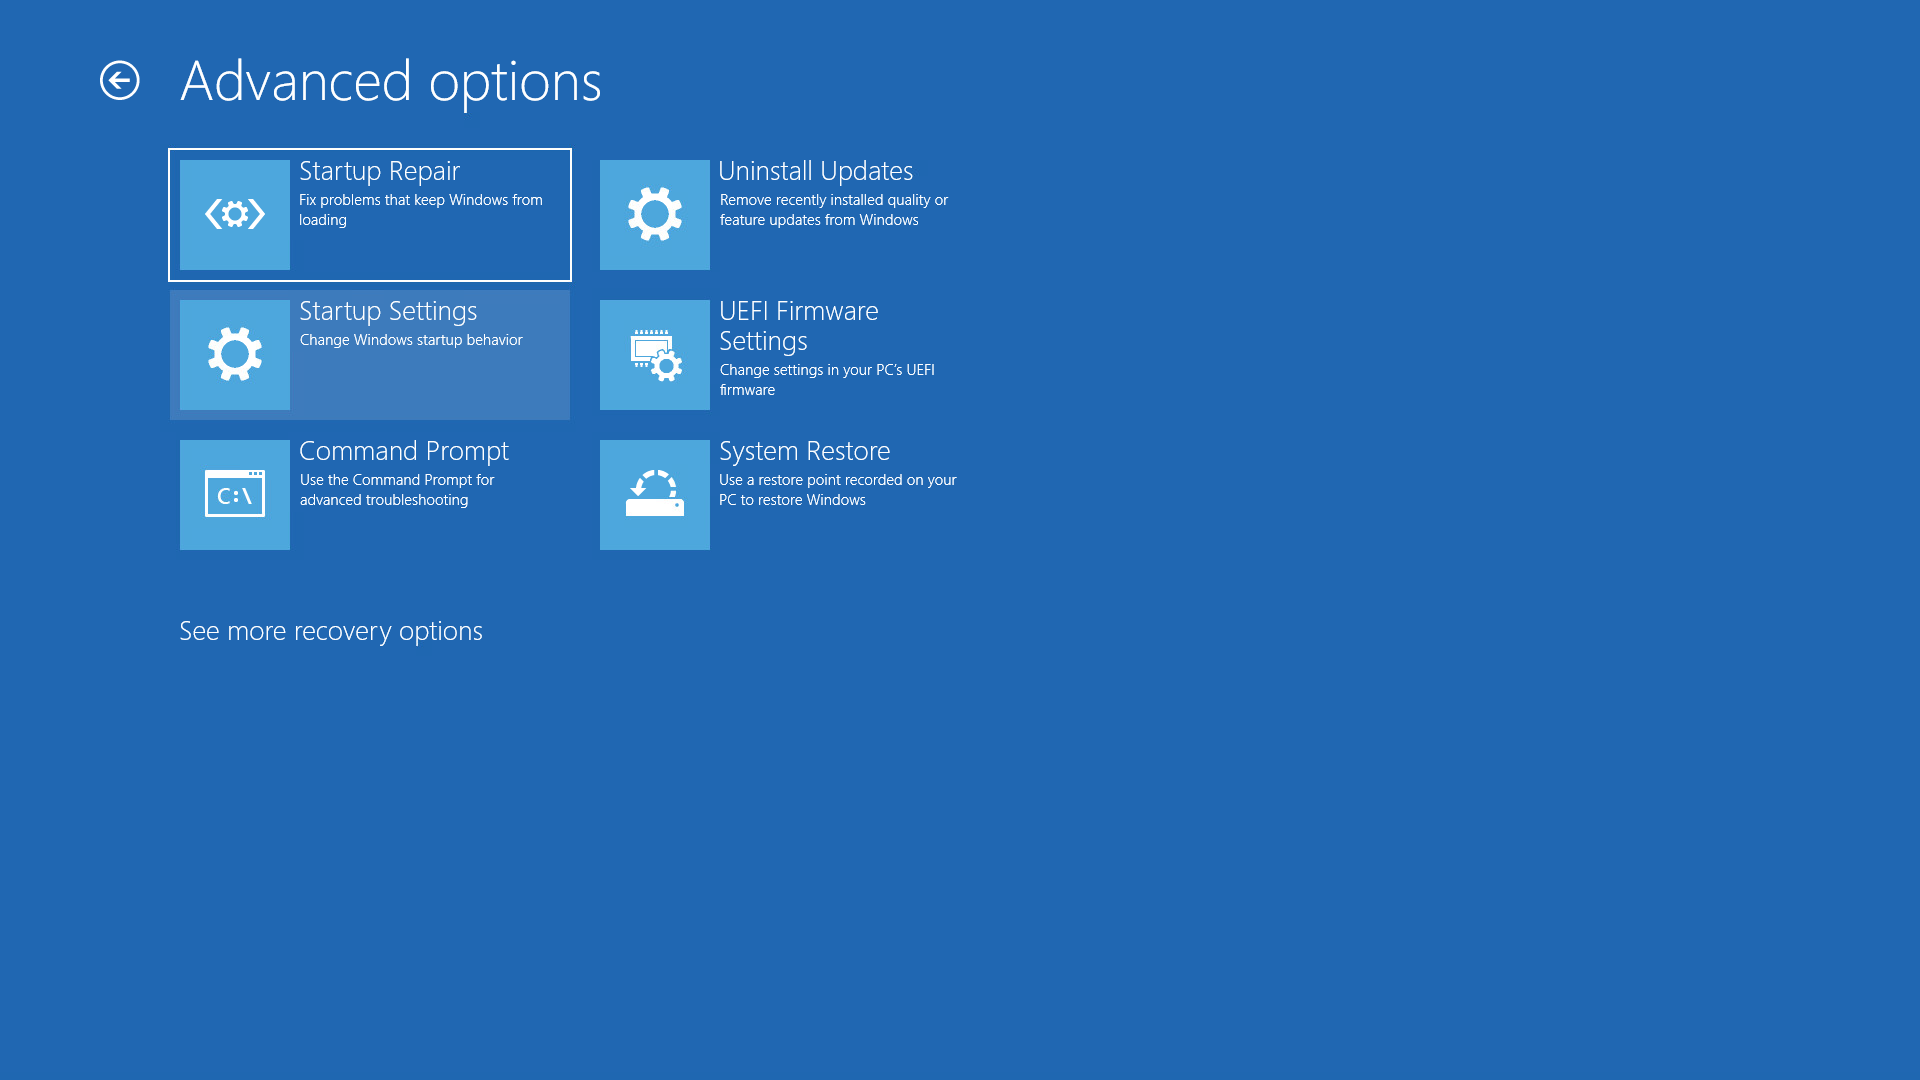 advances options for Windows reboot